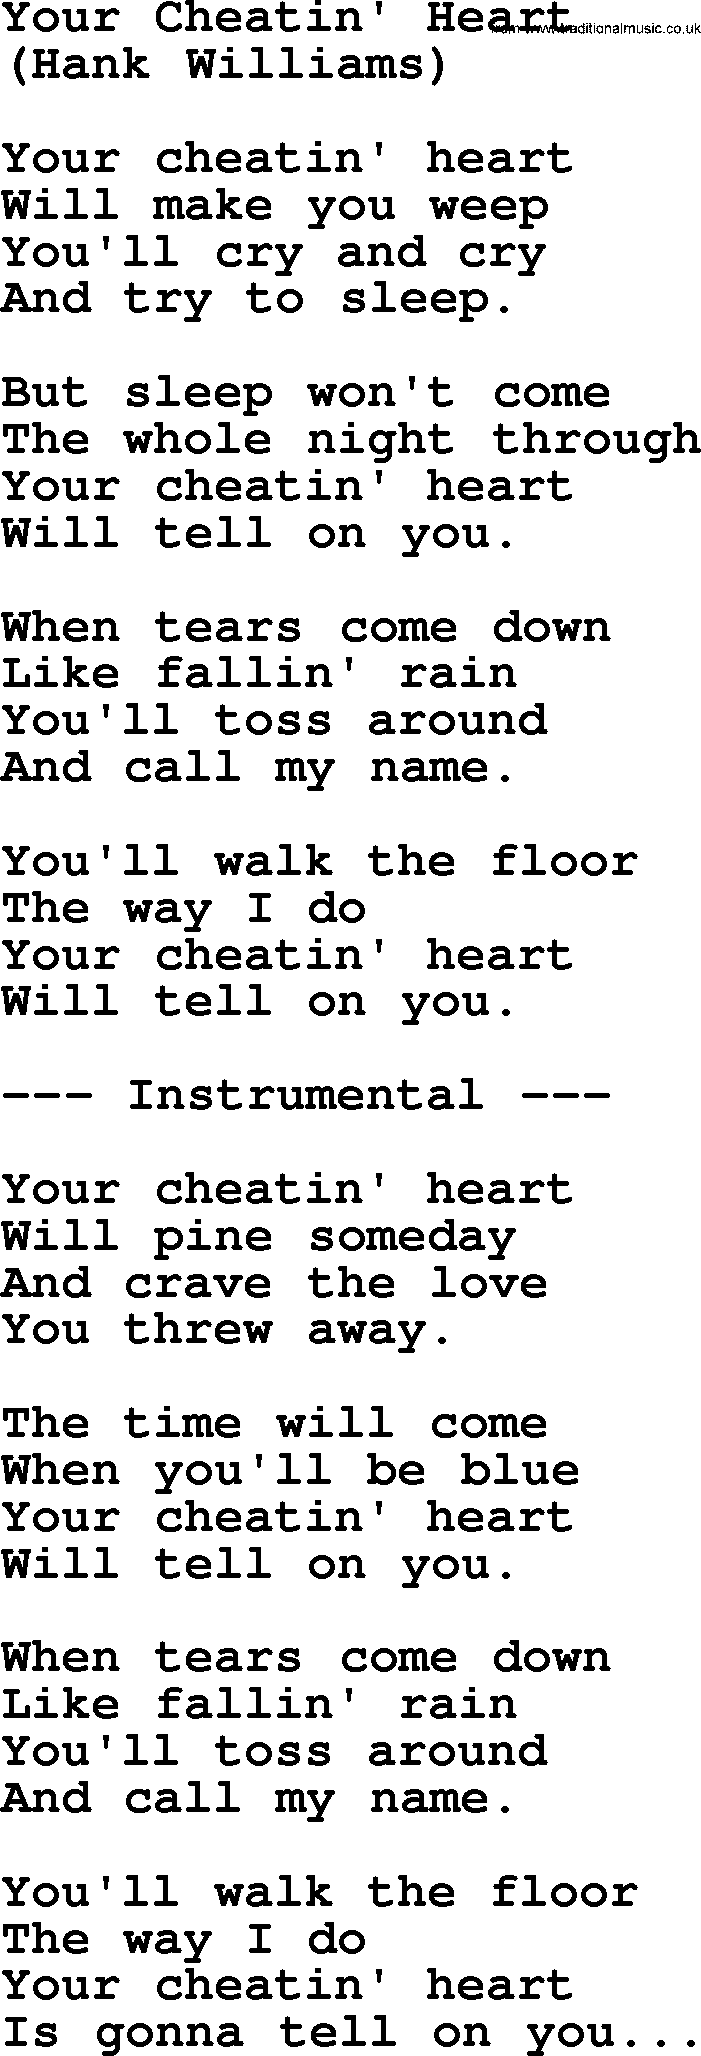 George Jones song: Your Cheatin' Heart, lyrics